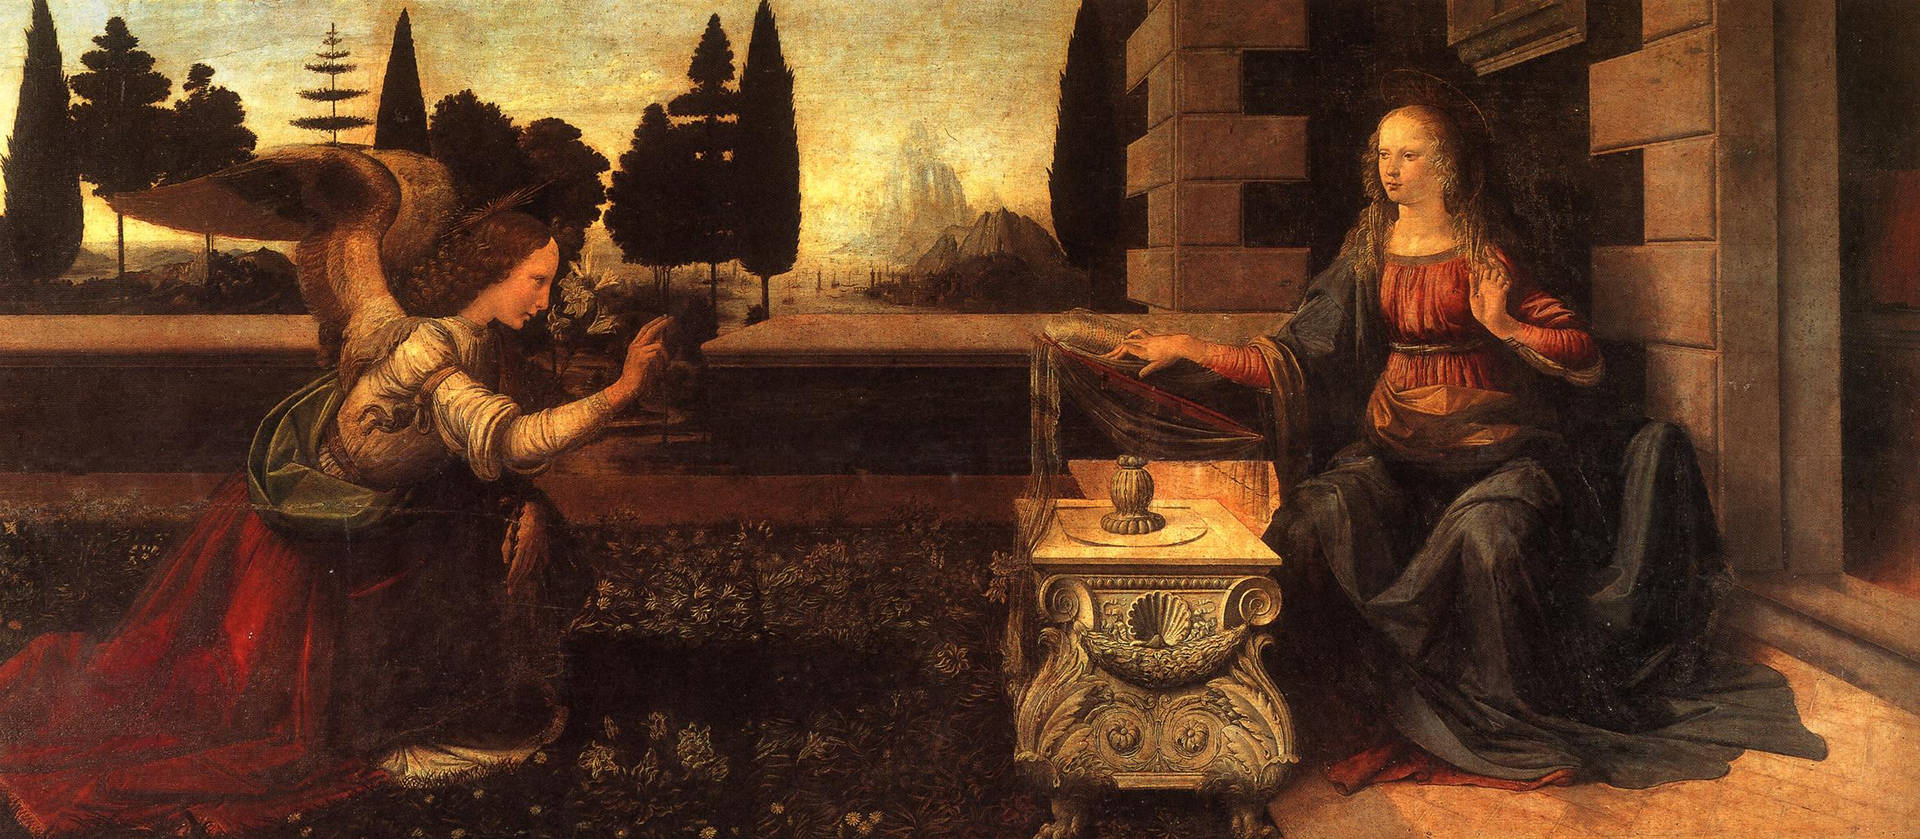 Annunciation By Leonardo Da Vinci Wallpaper